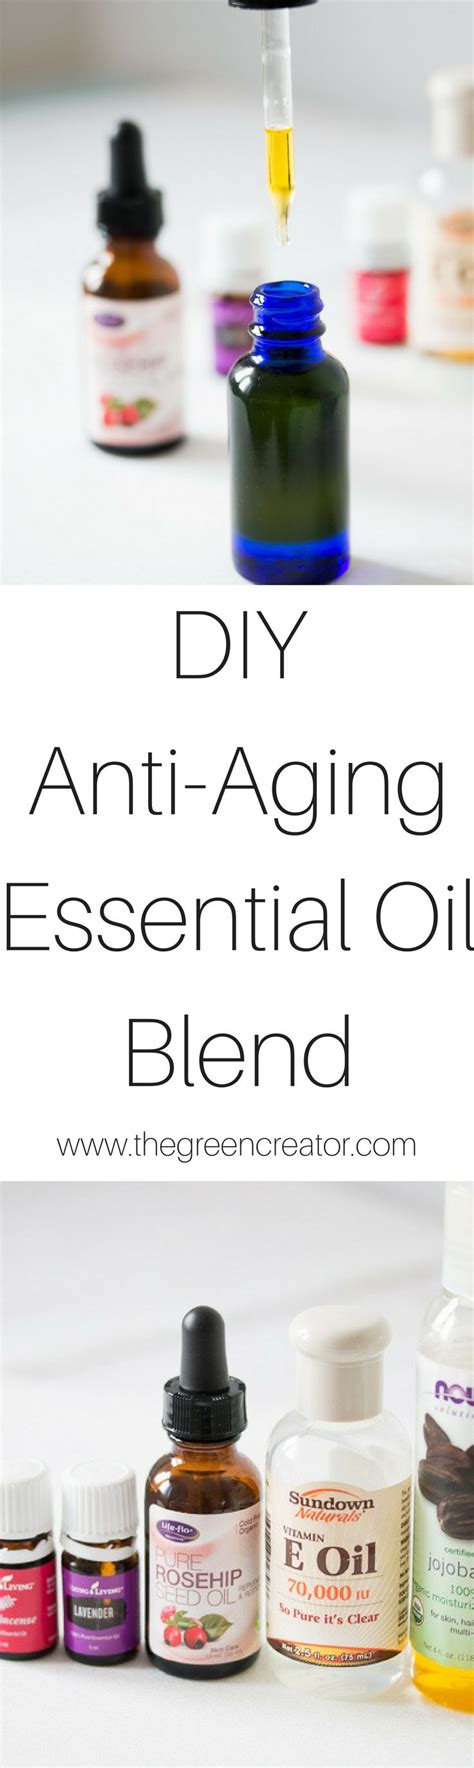 Diy Anti Aging Essential Oil Blend The Green Creator Diy Anti Aging